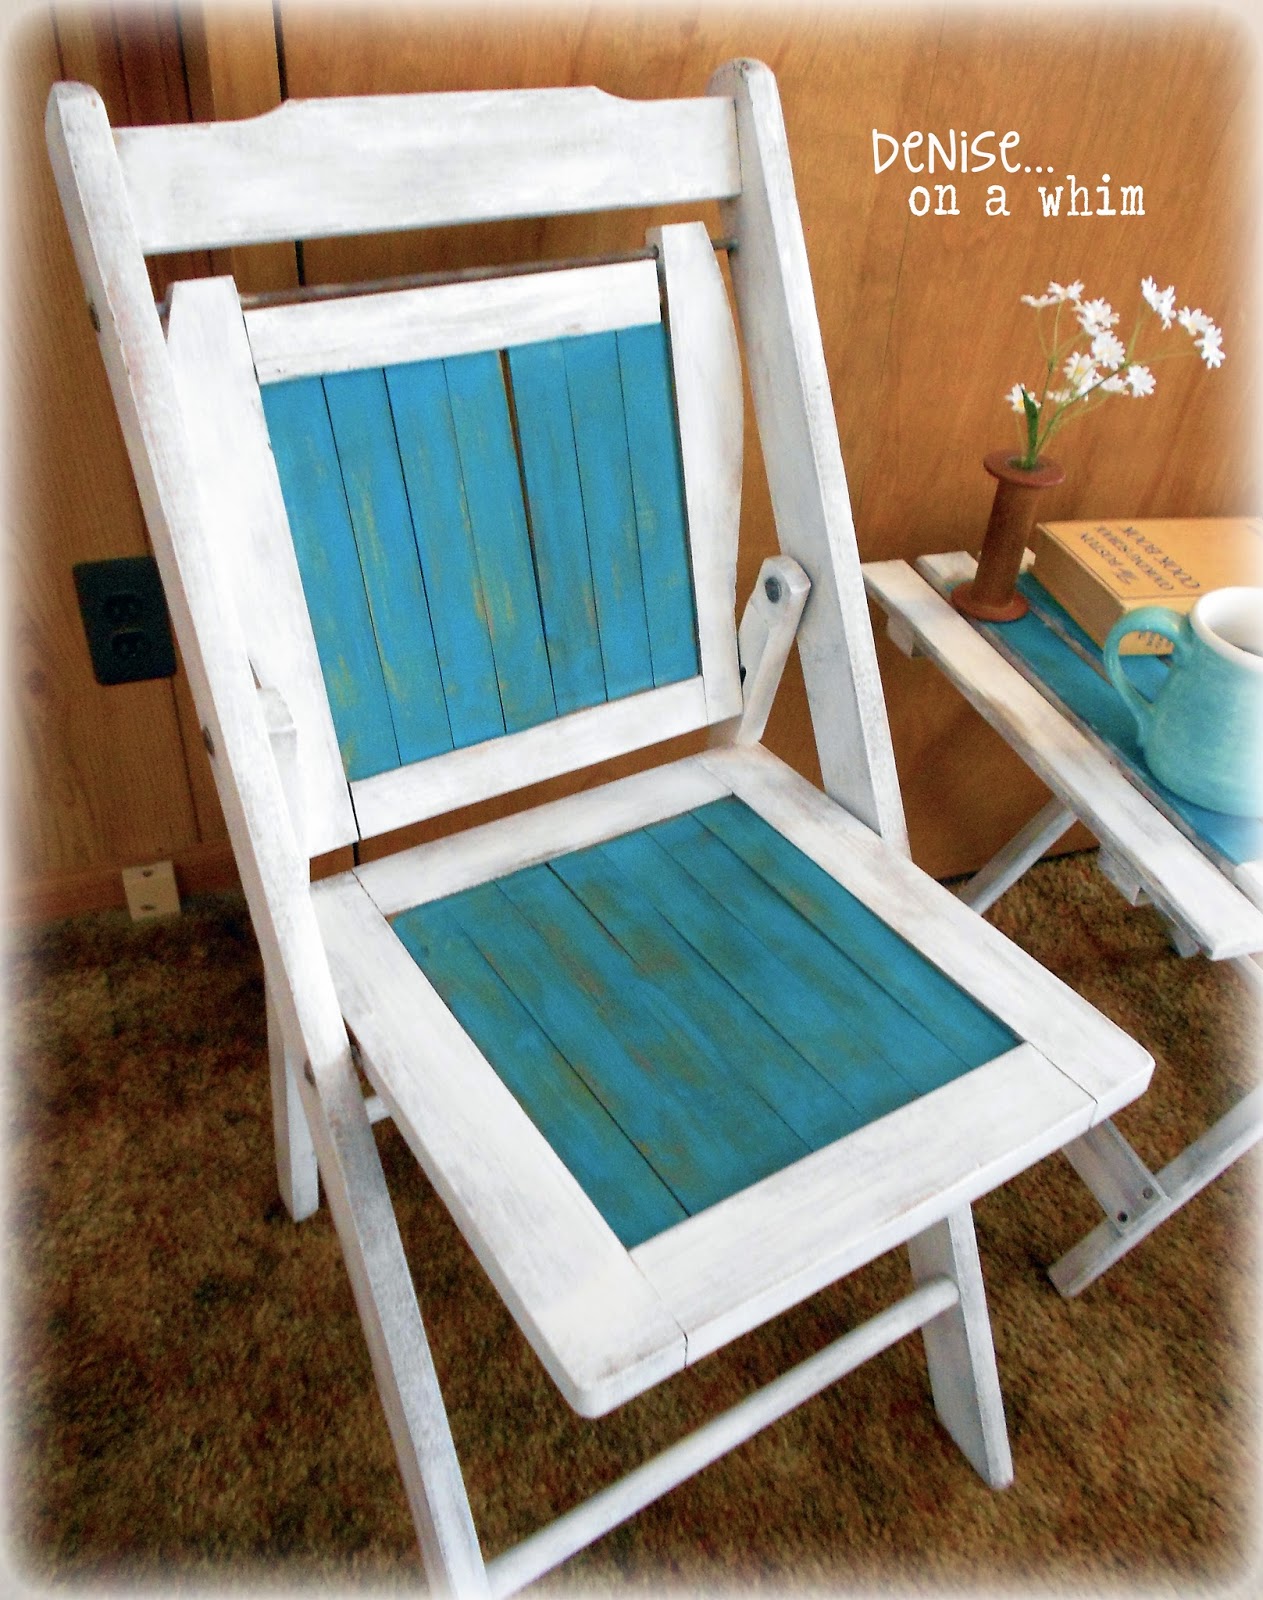 Vintage wooden folding chair via http://deniseonawhim.blogspot.com